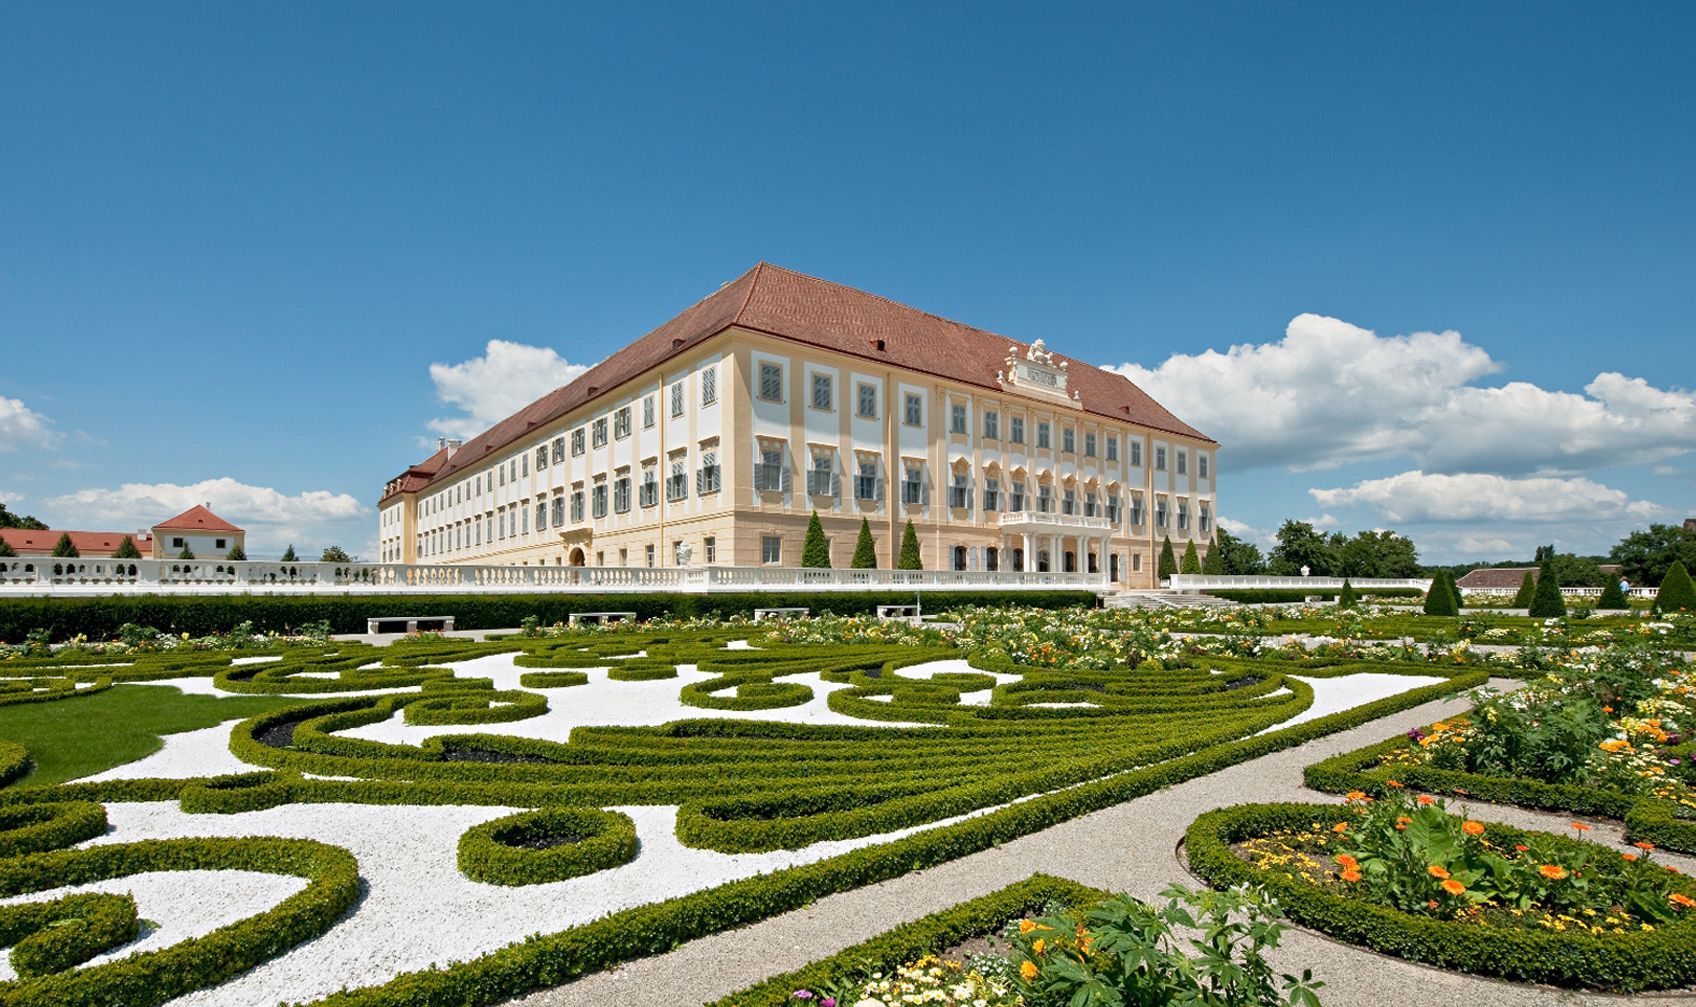 Dovolena v Rakousku - zamek Hof